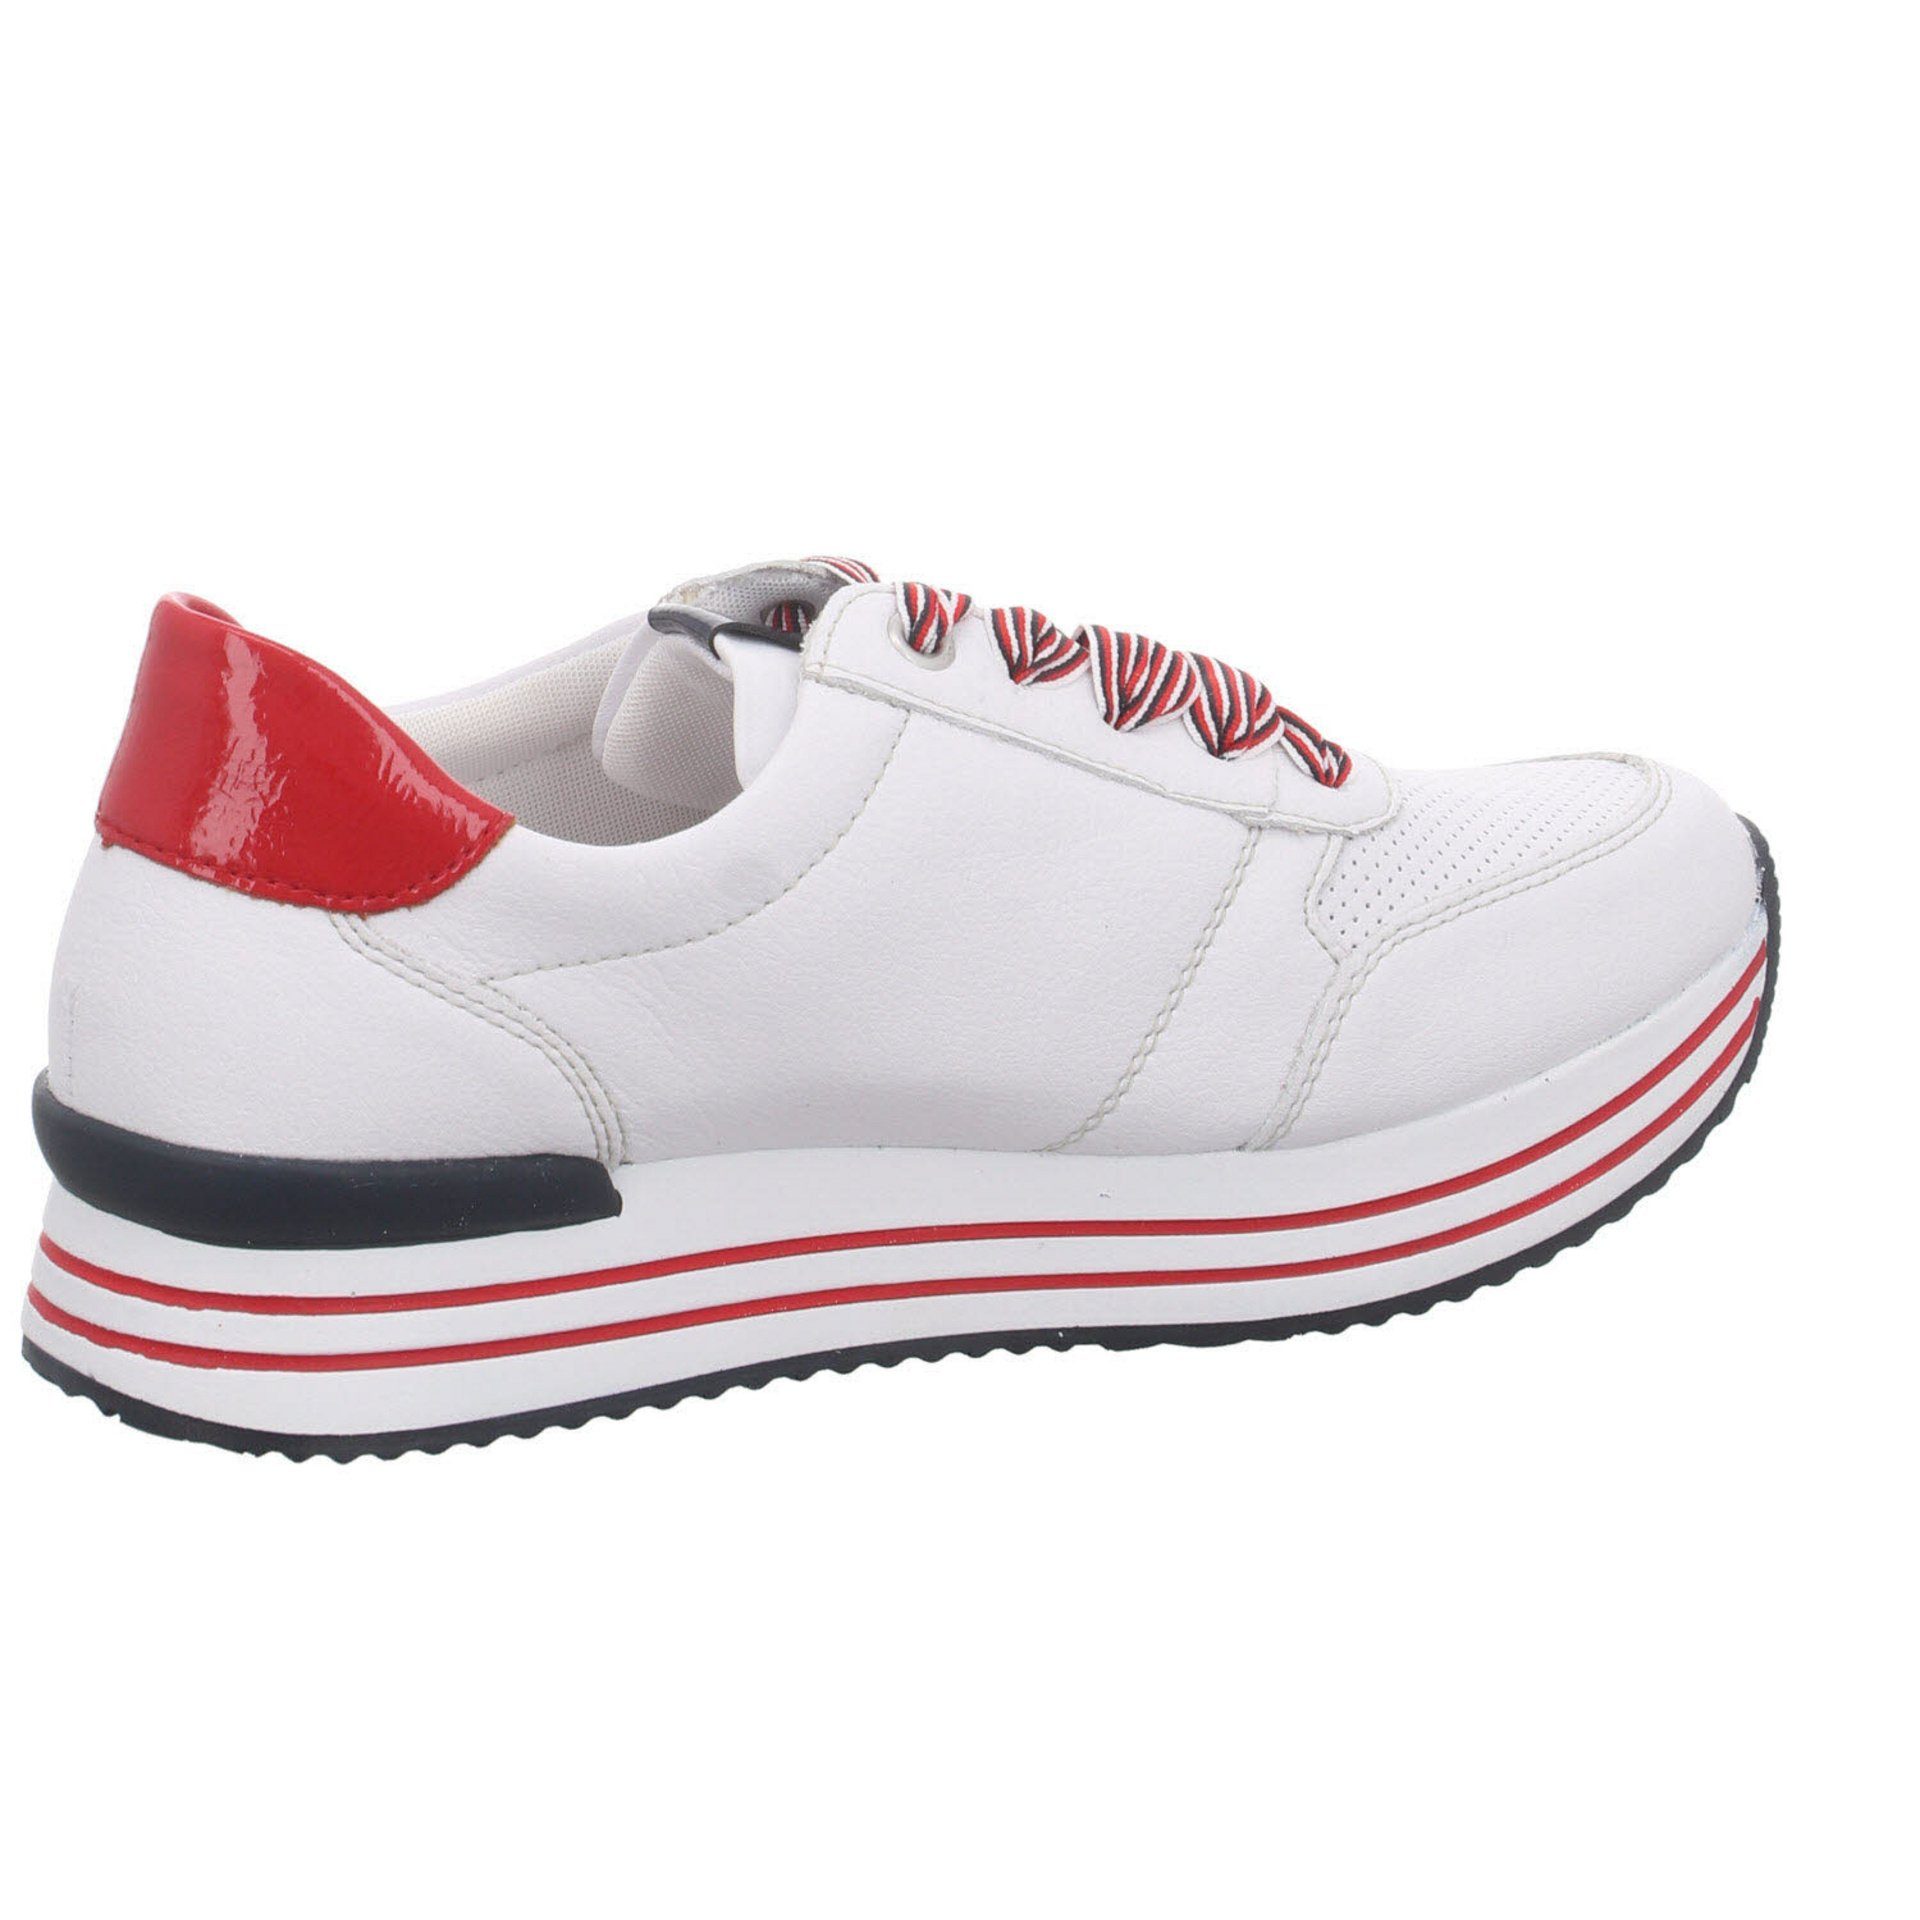 Sport Schuhe Leder-/Textilkombination Halbschuhe Damen weiß kombi Sneaker Sneaker Schnürschuh Remonte